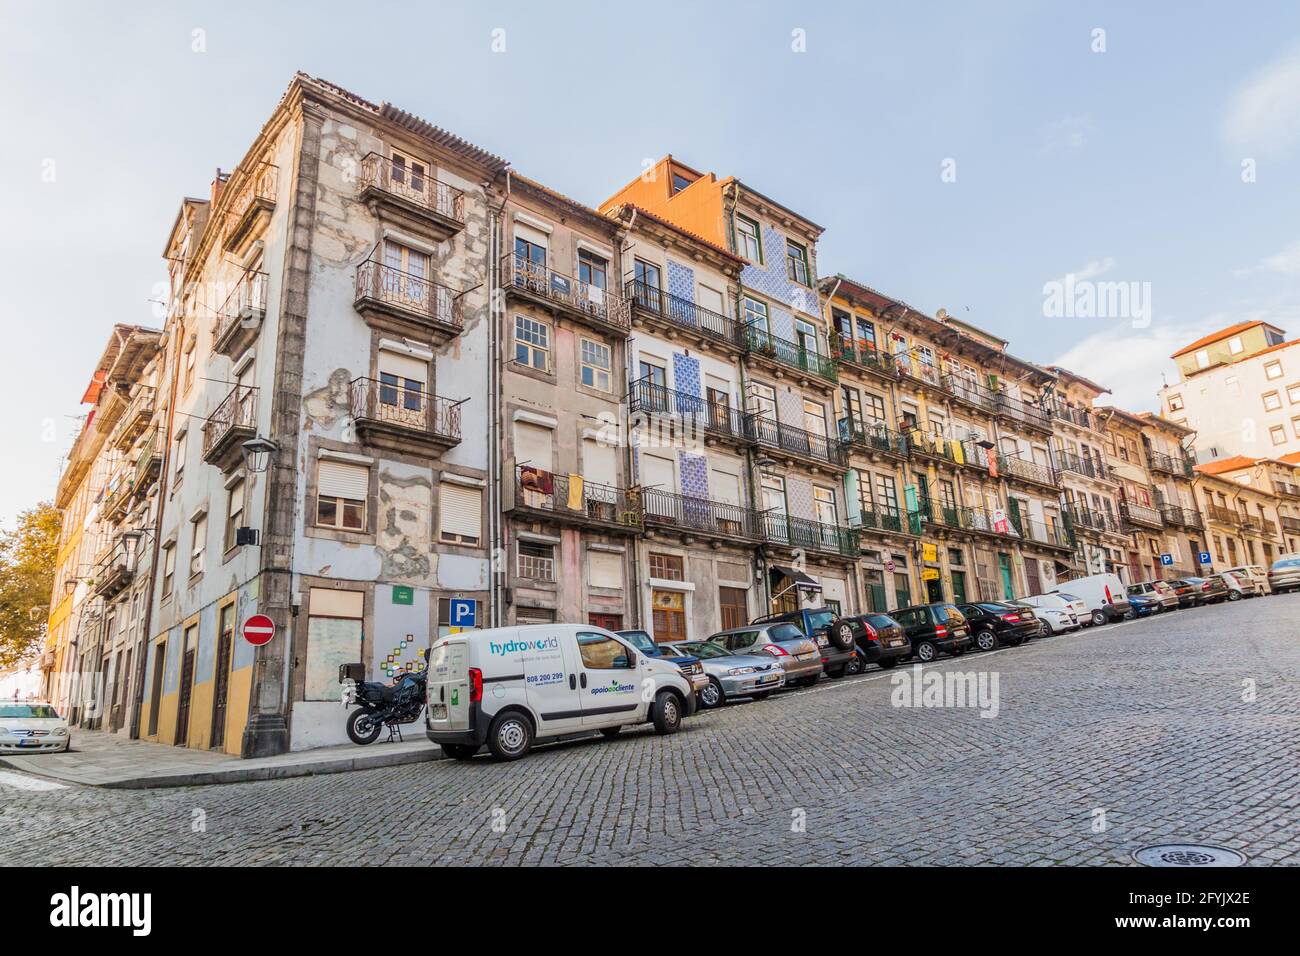 PORTO, PORTUGAL - 16. OKTOBER 2017: Häuserblock in einer steilen Straße in Porto, Portugal. Stockfoto